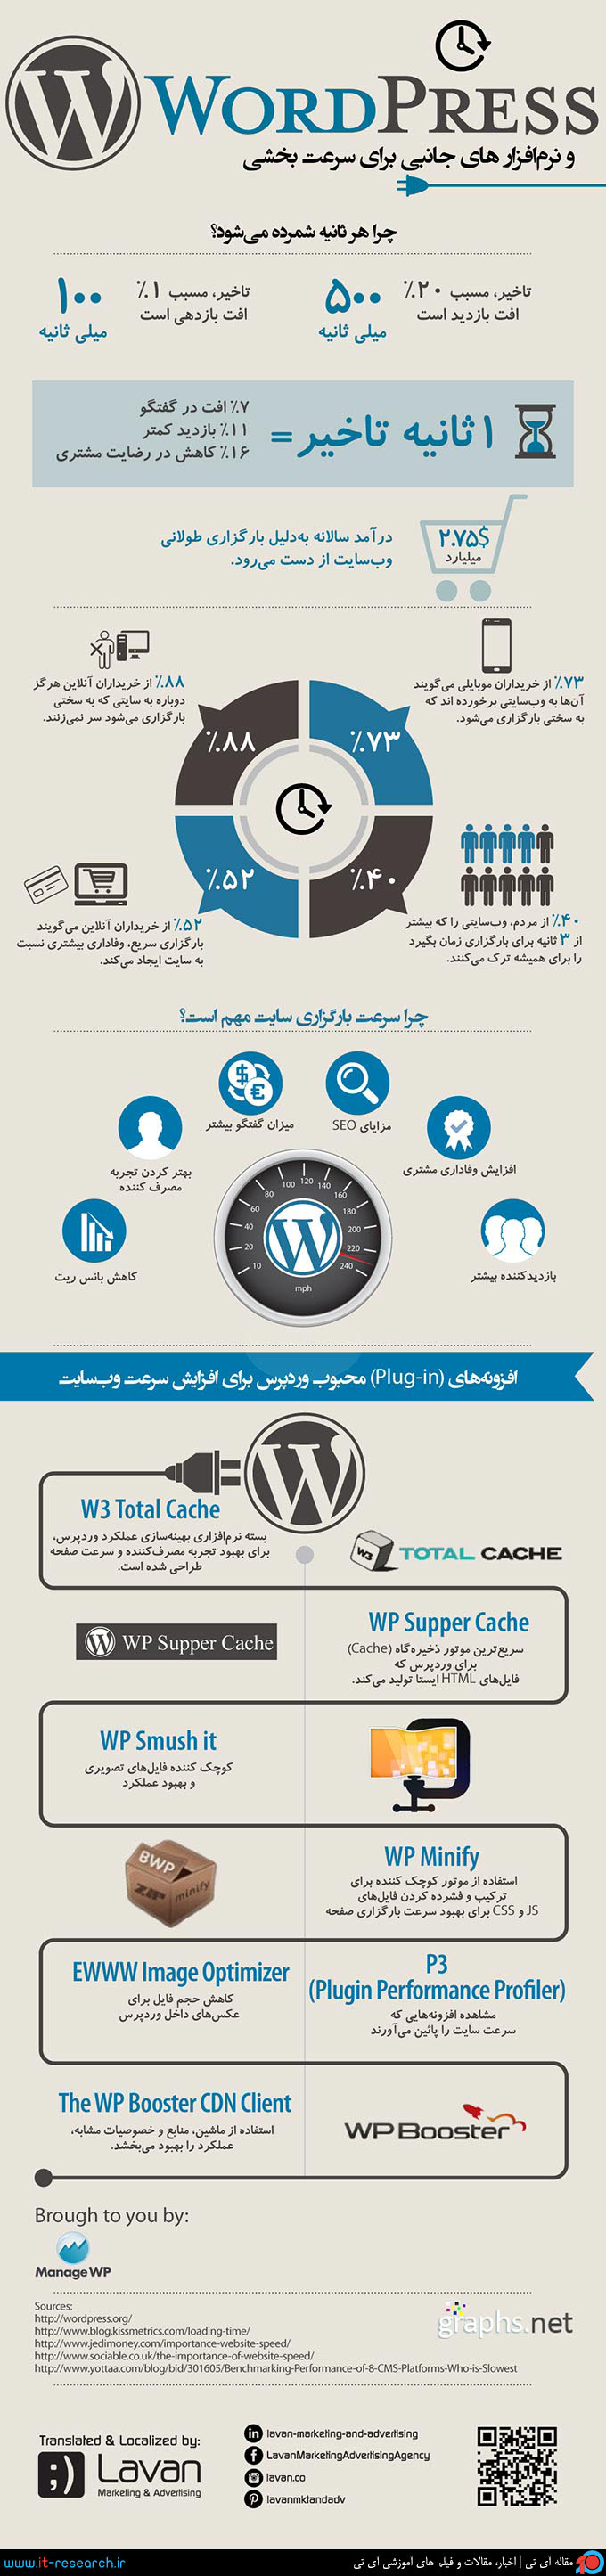 Wordpress Infographic